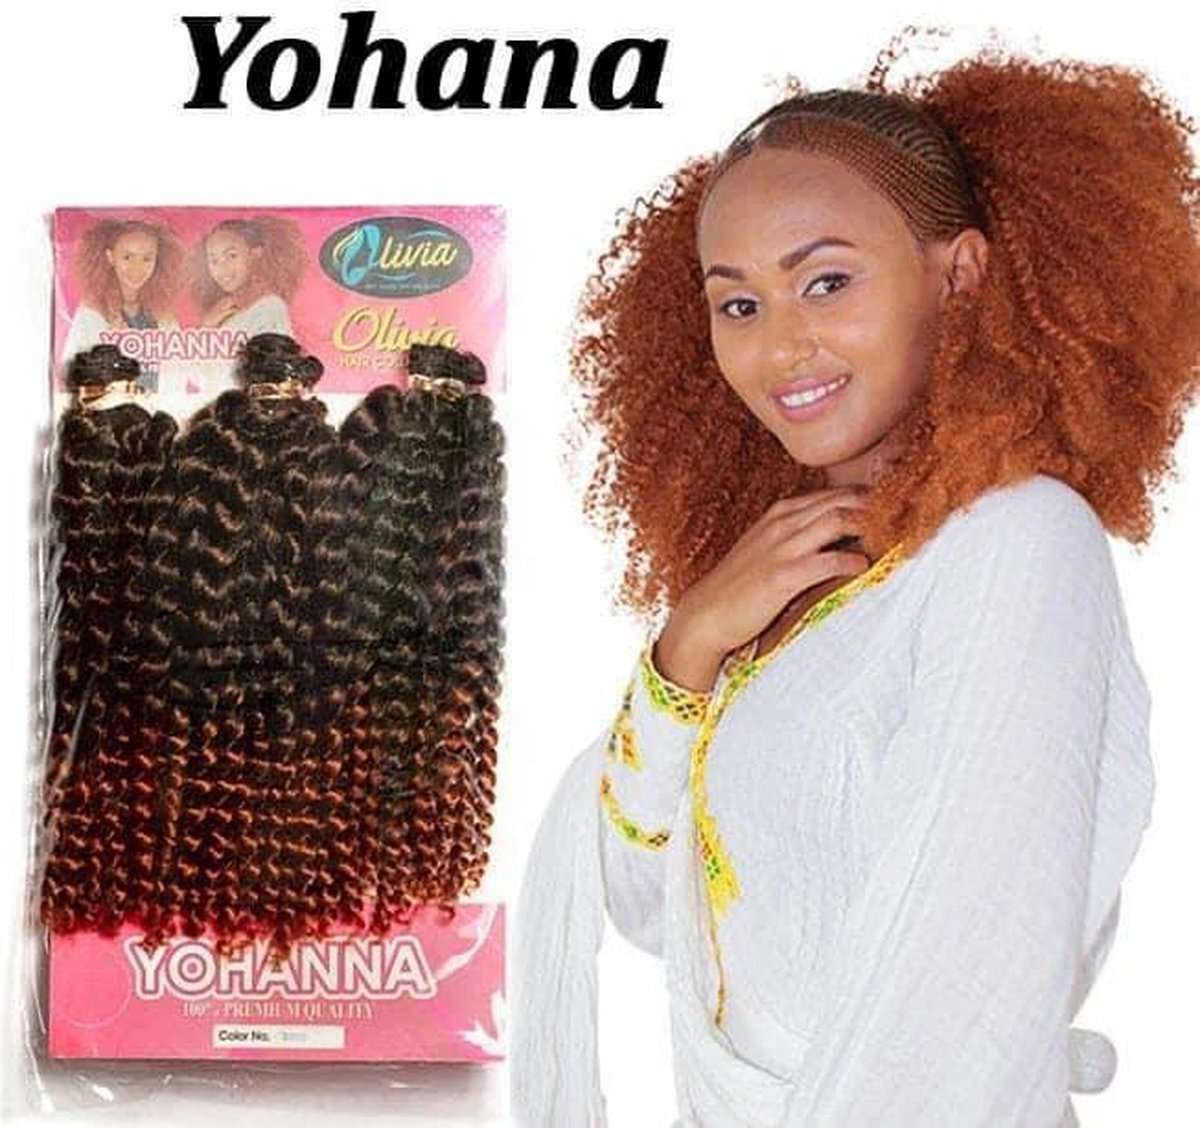 yohana